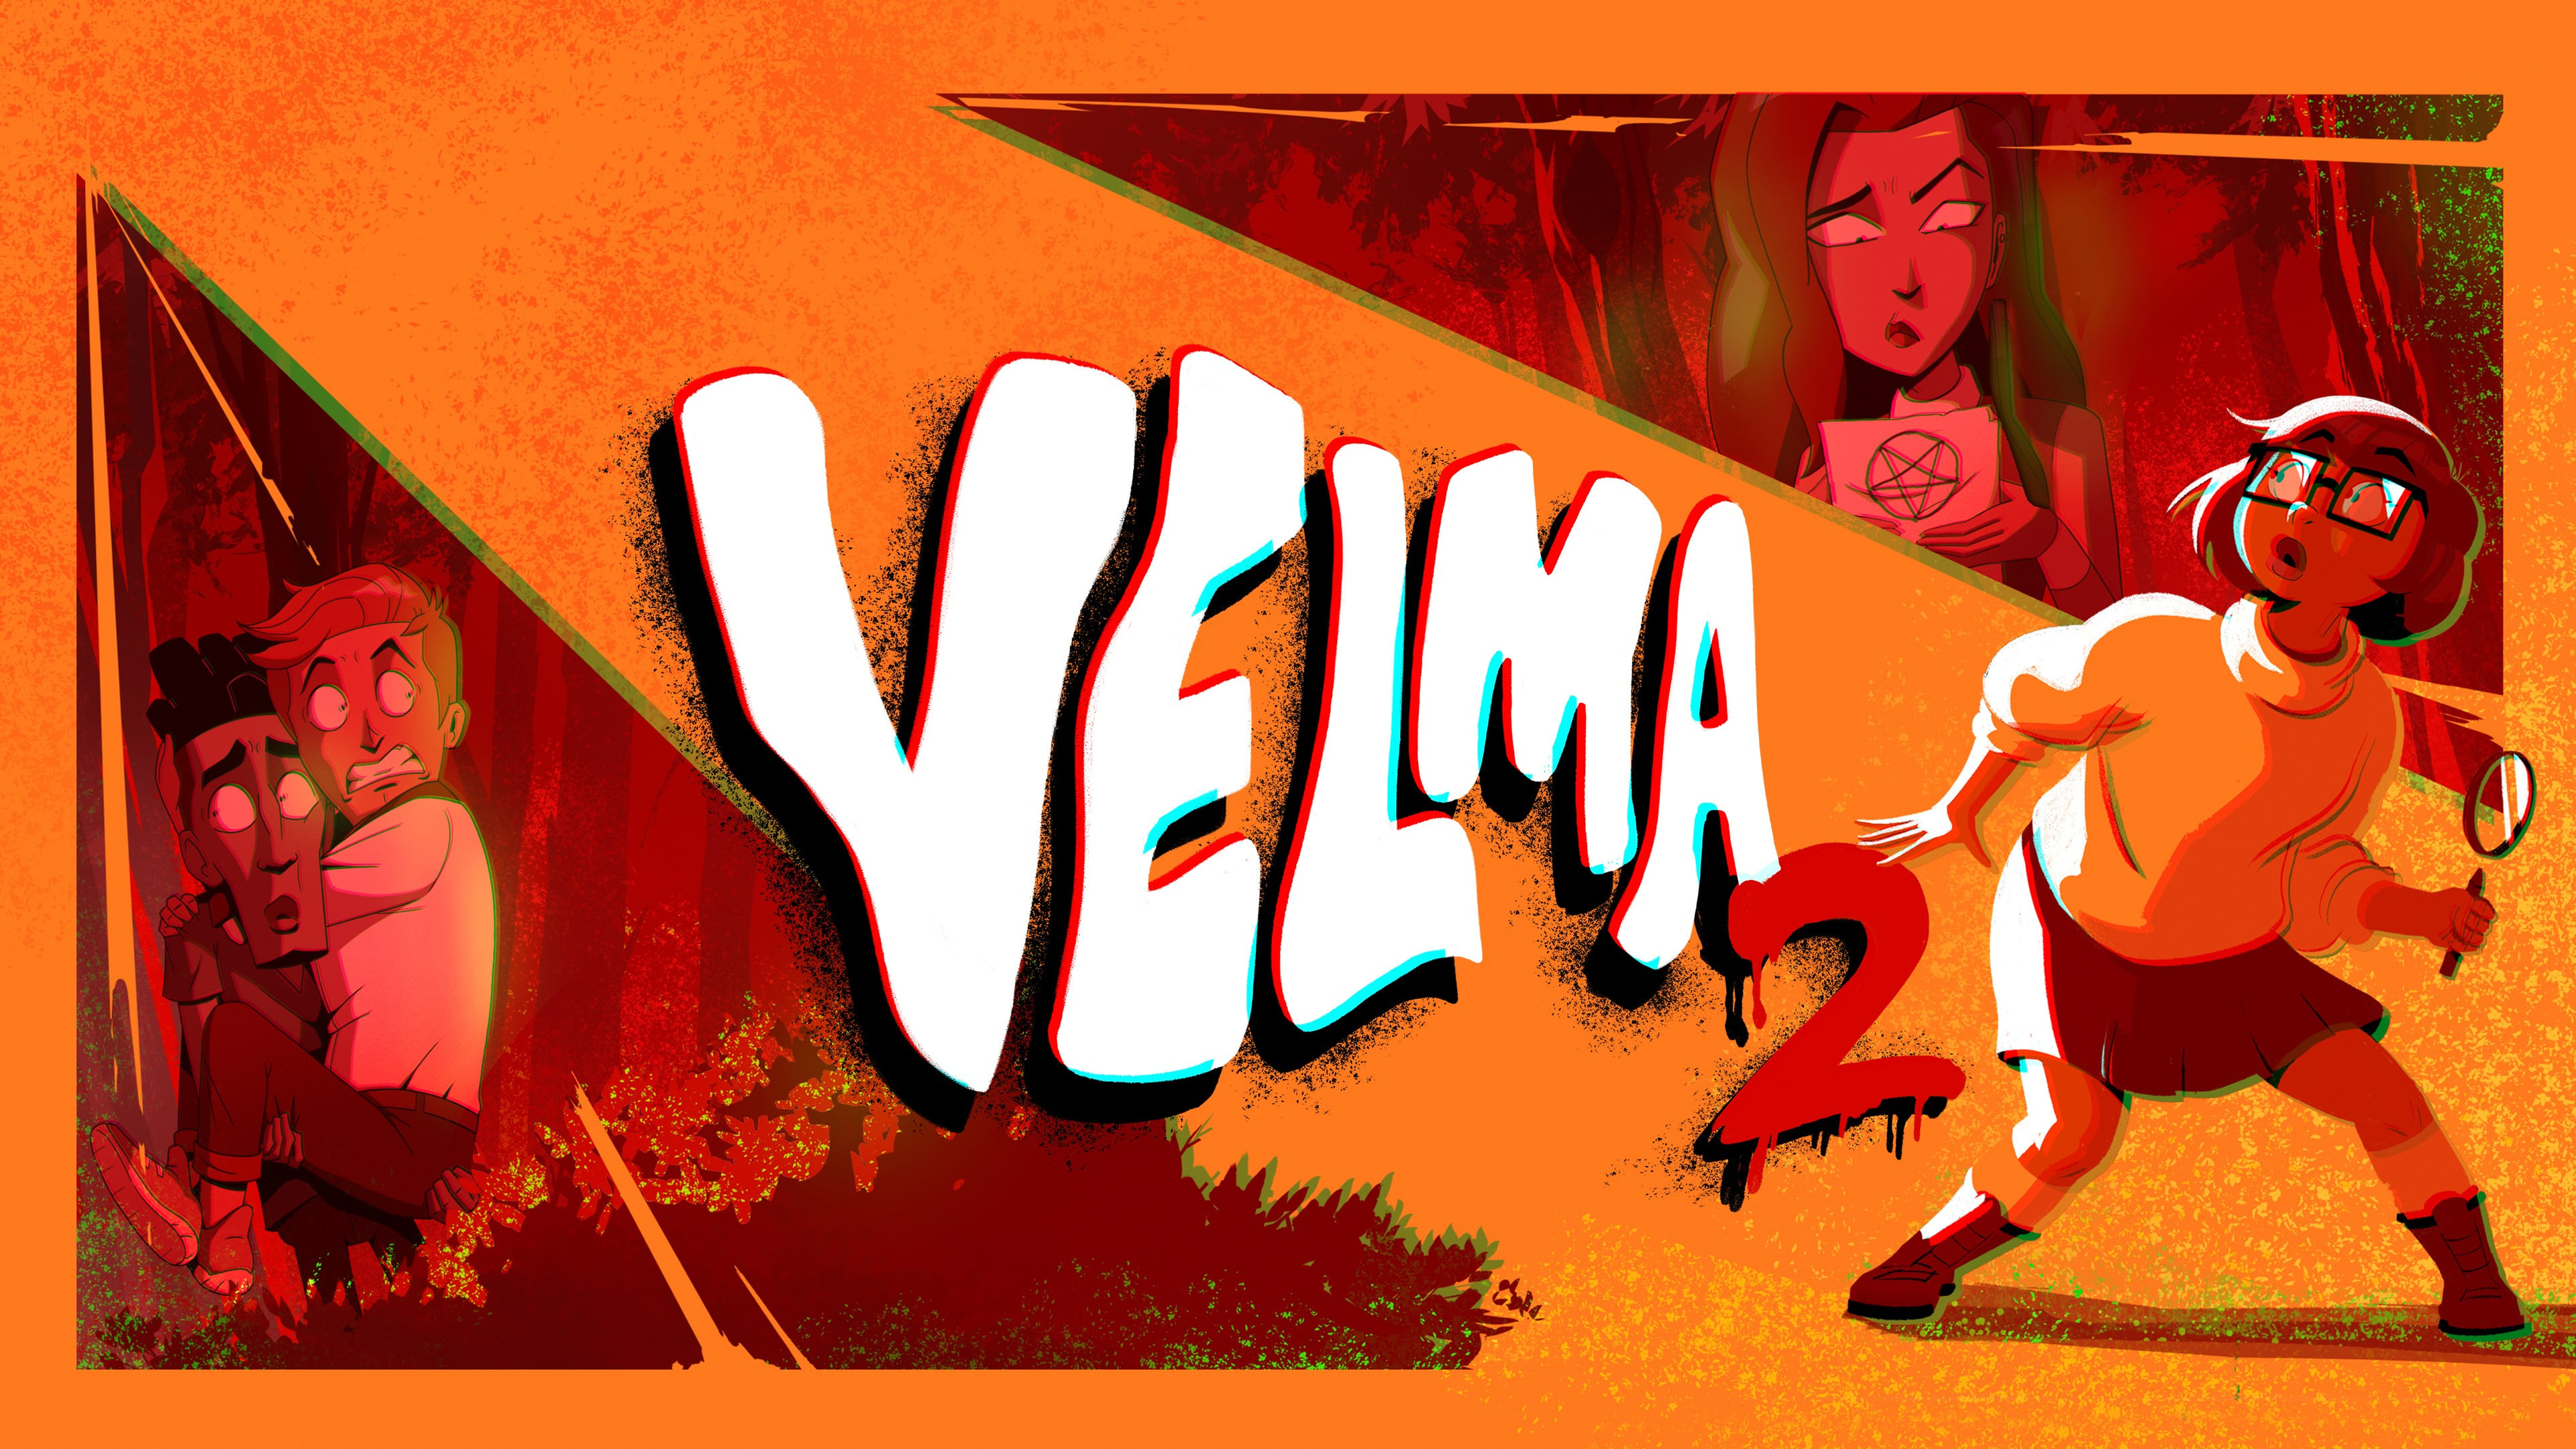 Velma - Season 1 Episode 3